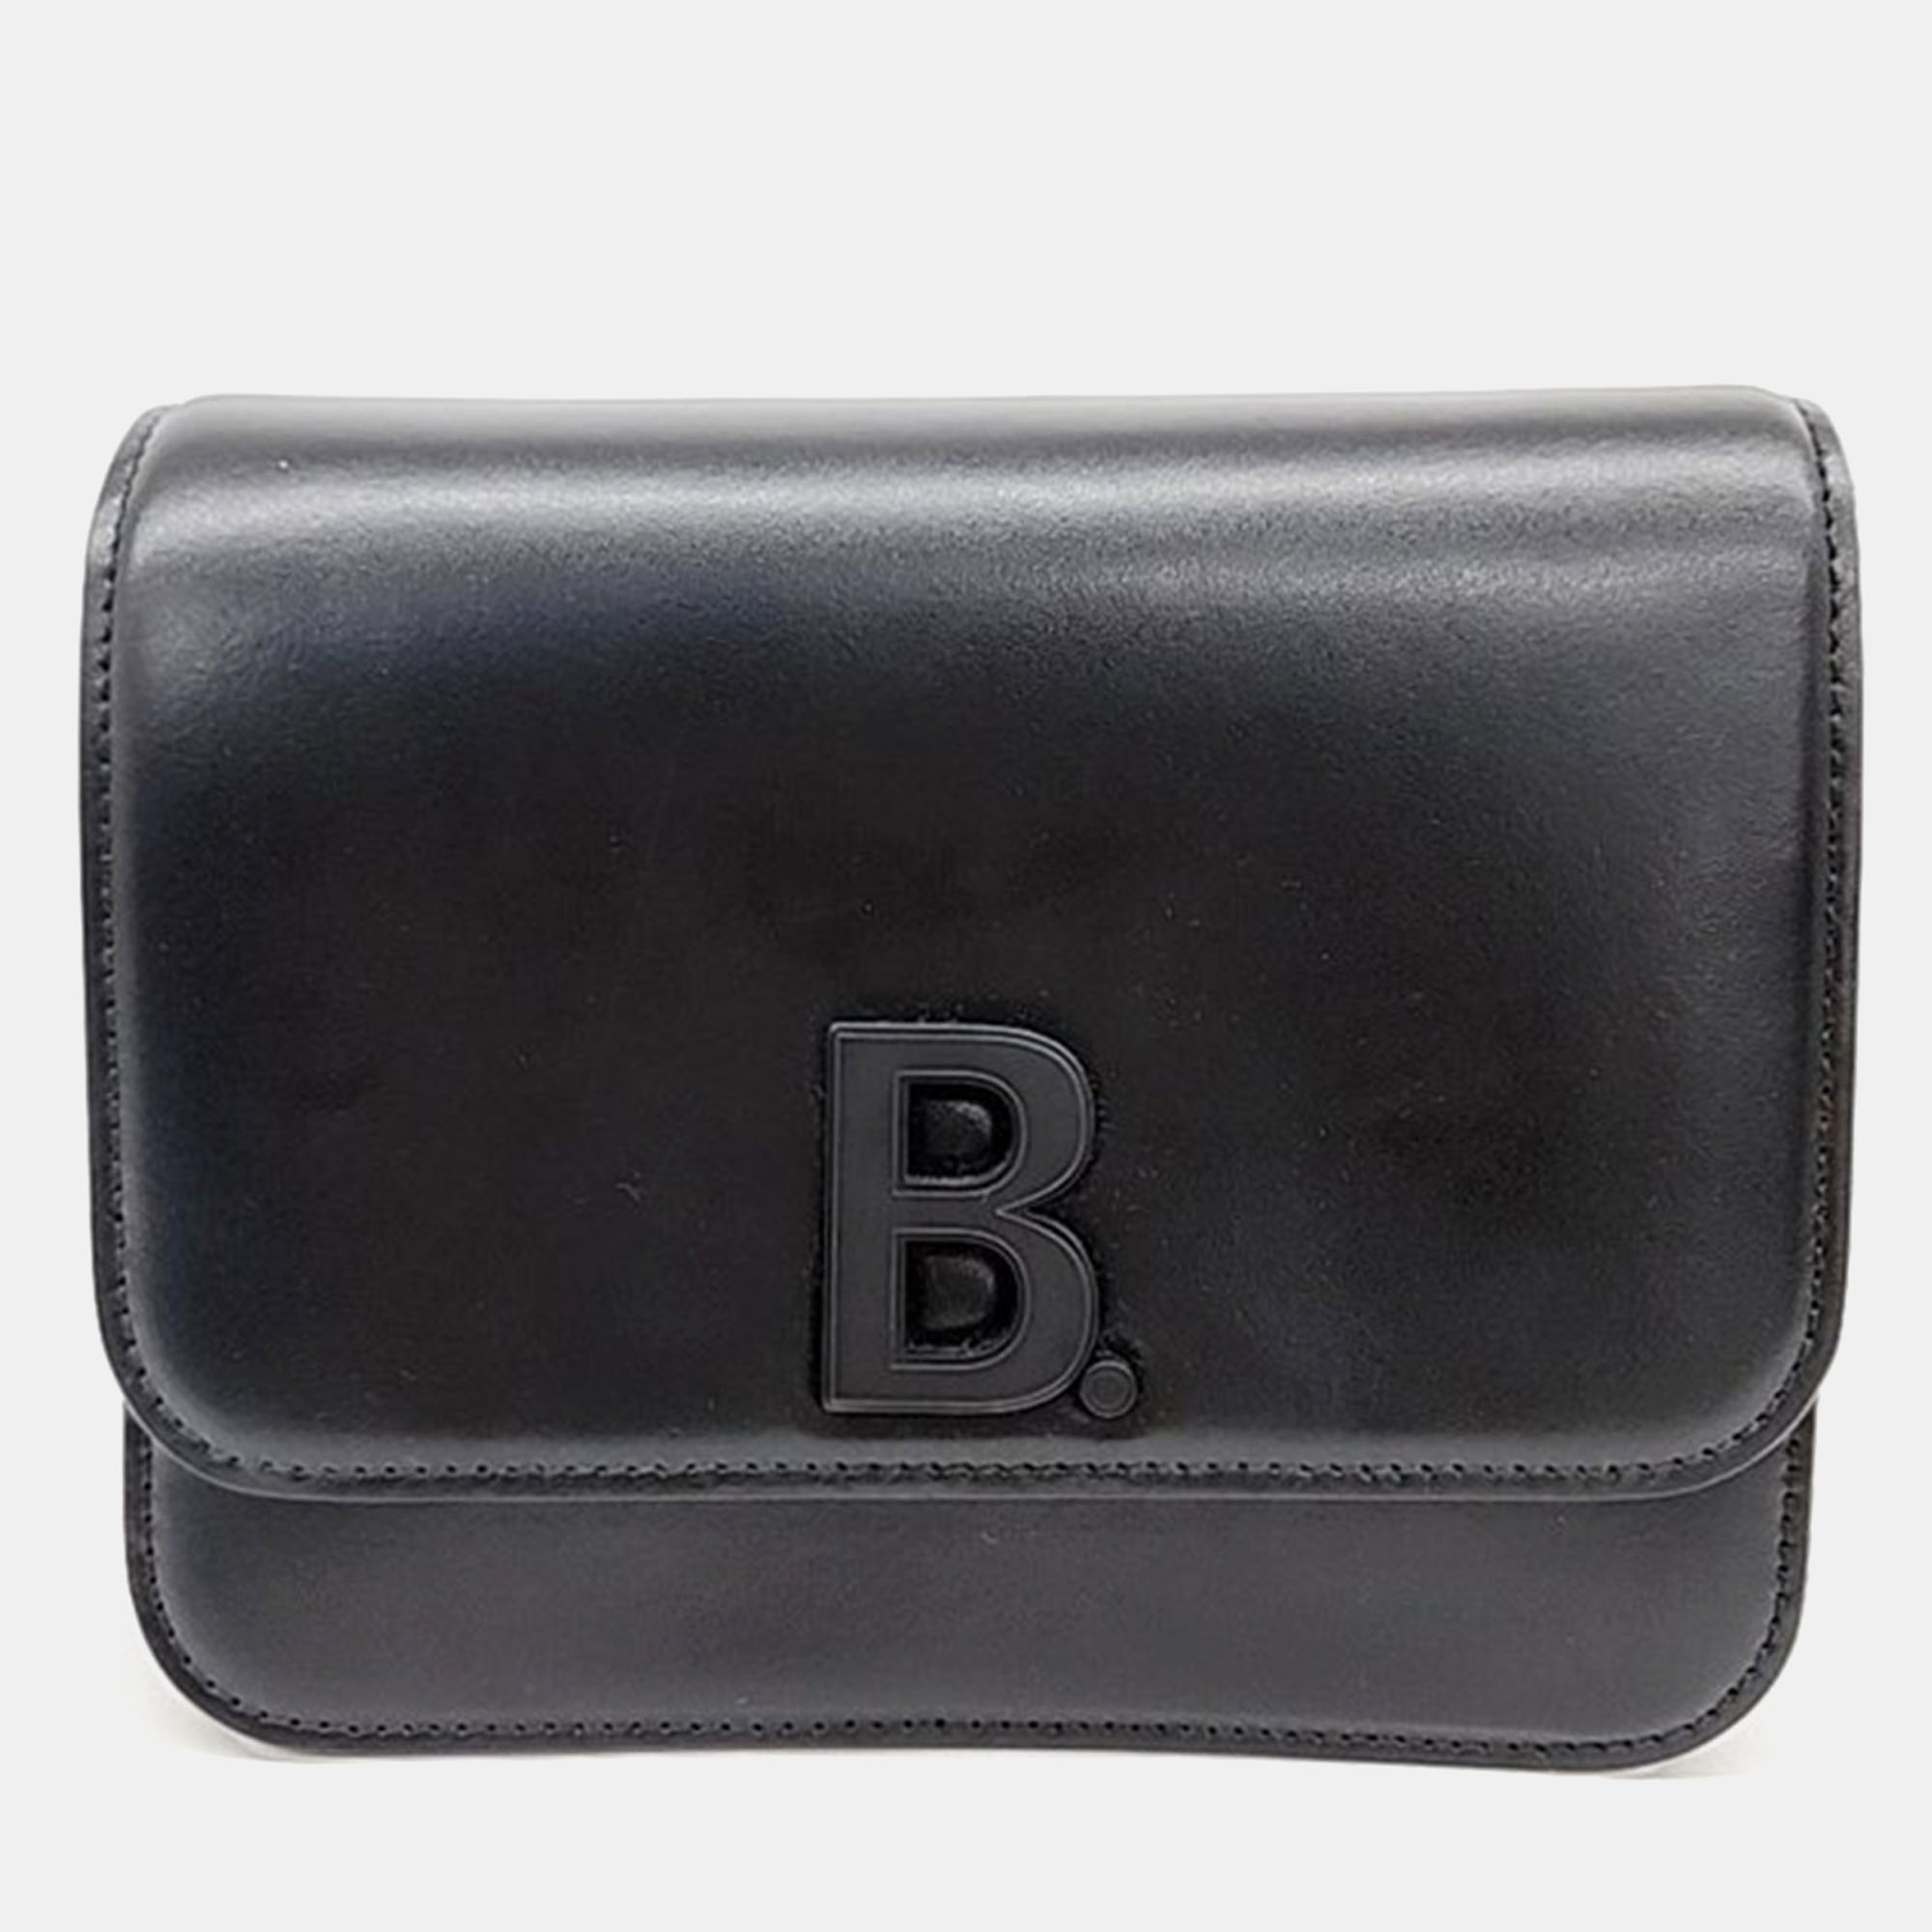 Balenciaga black leather b logo shoulder bag